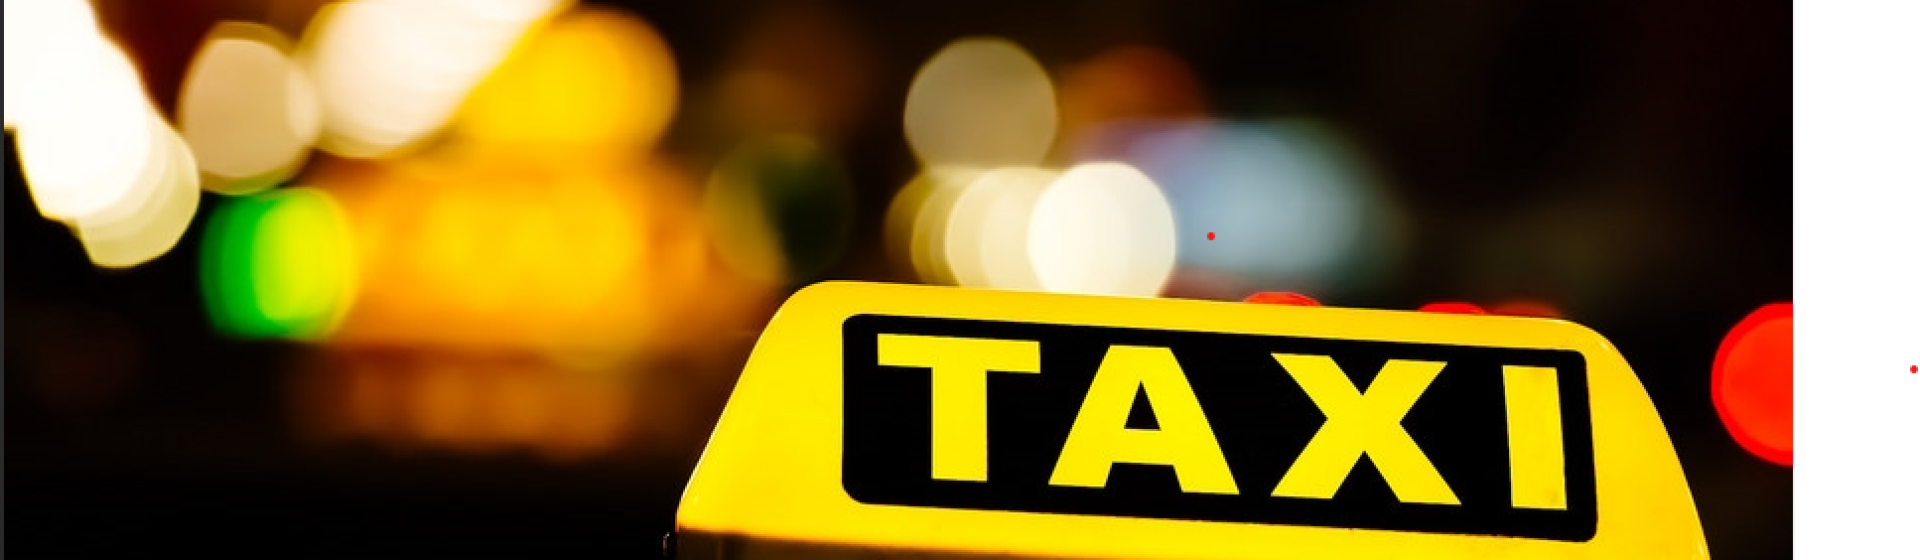 Service de taxi à Montauban – Allo Taxi Michel